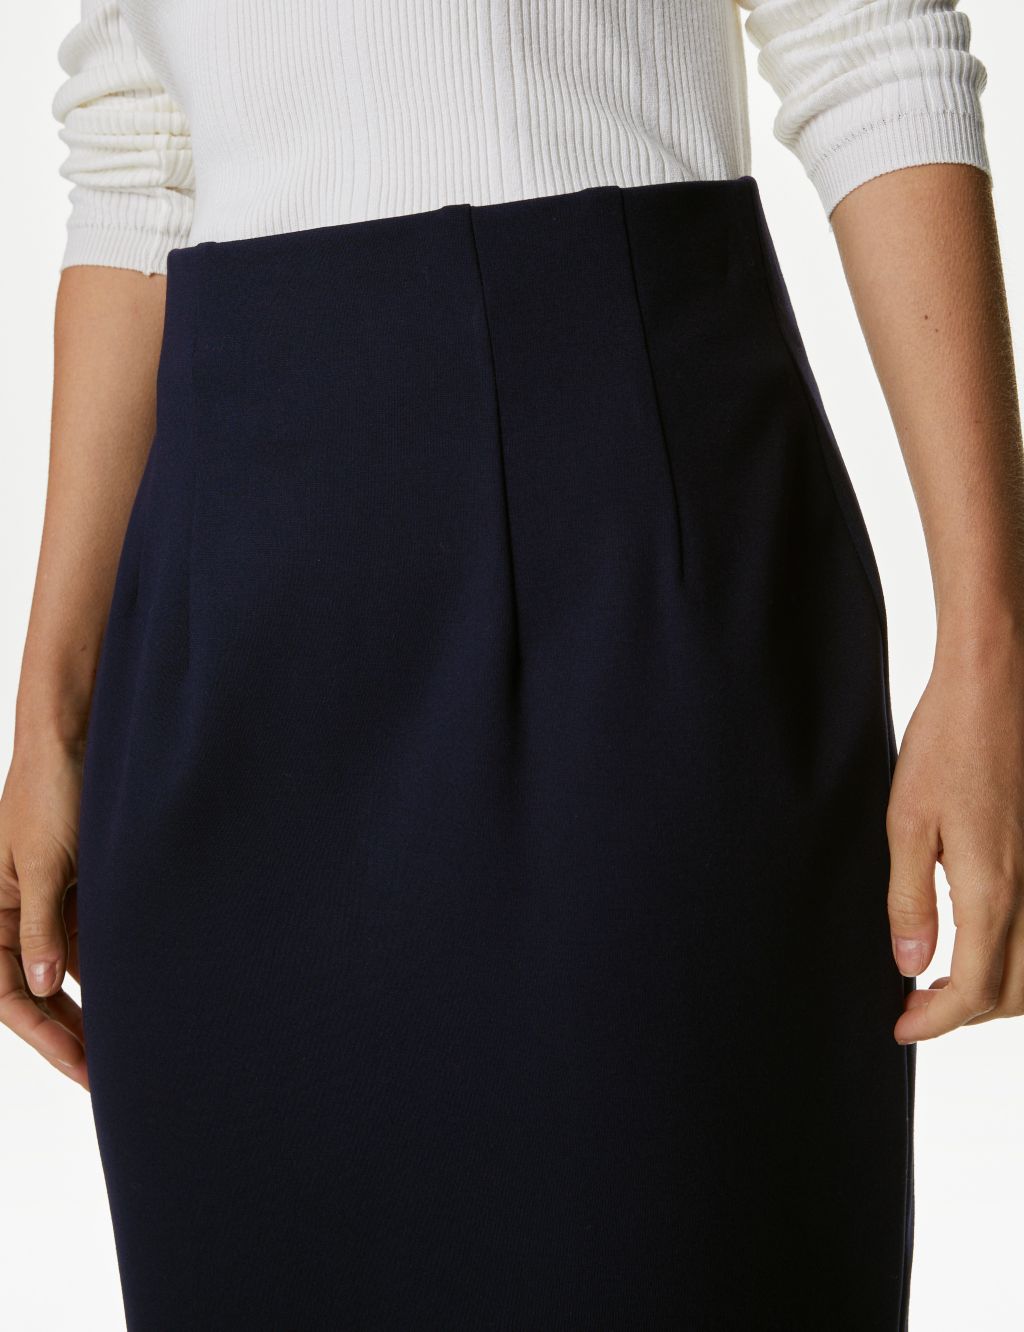 Jersey Knee Length Pencil Skirt image 2